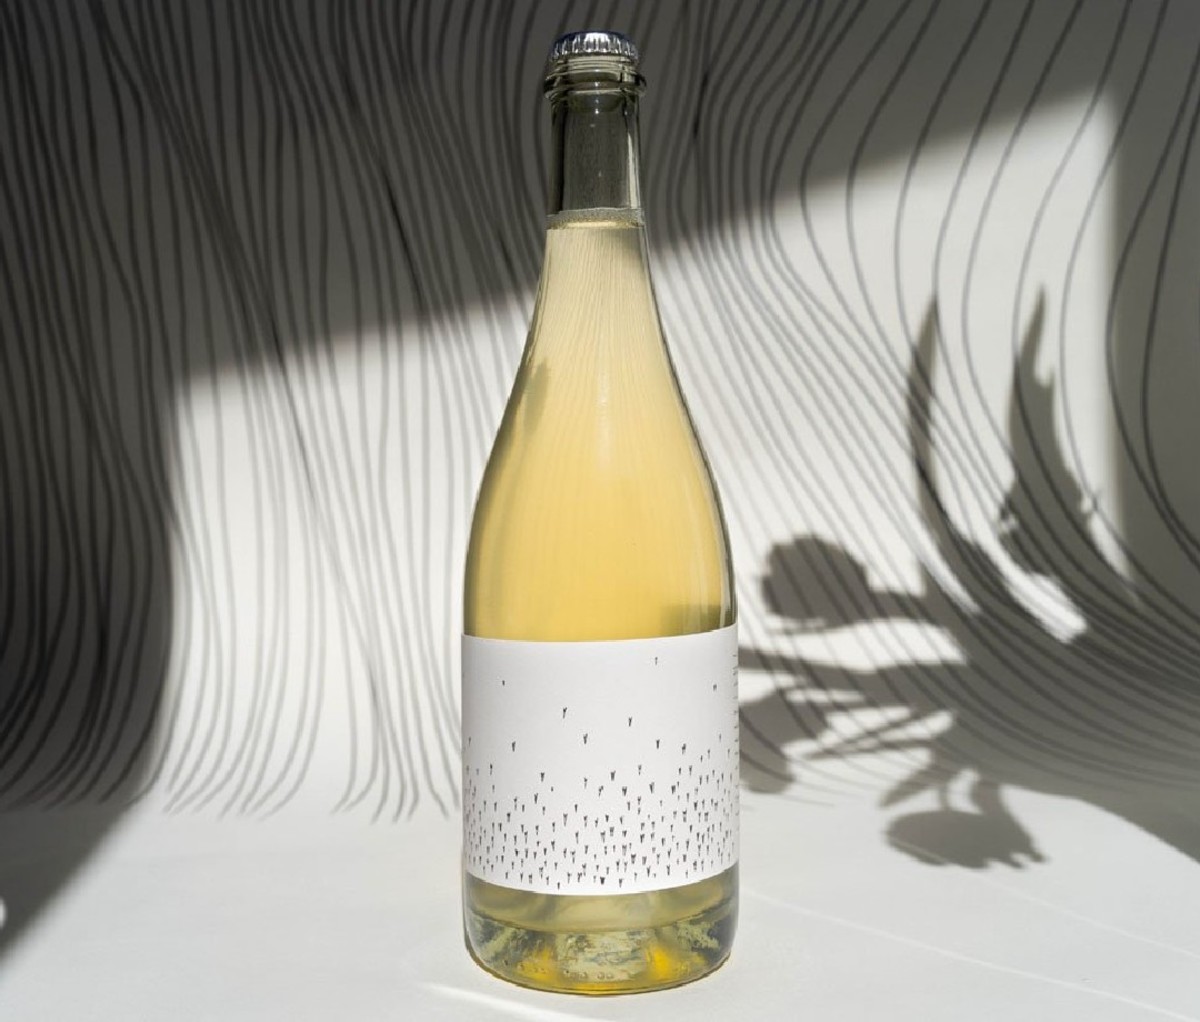 A bottle of Broc Cellars Love Sparkling Chenin Blanc wine.